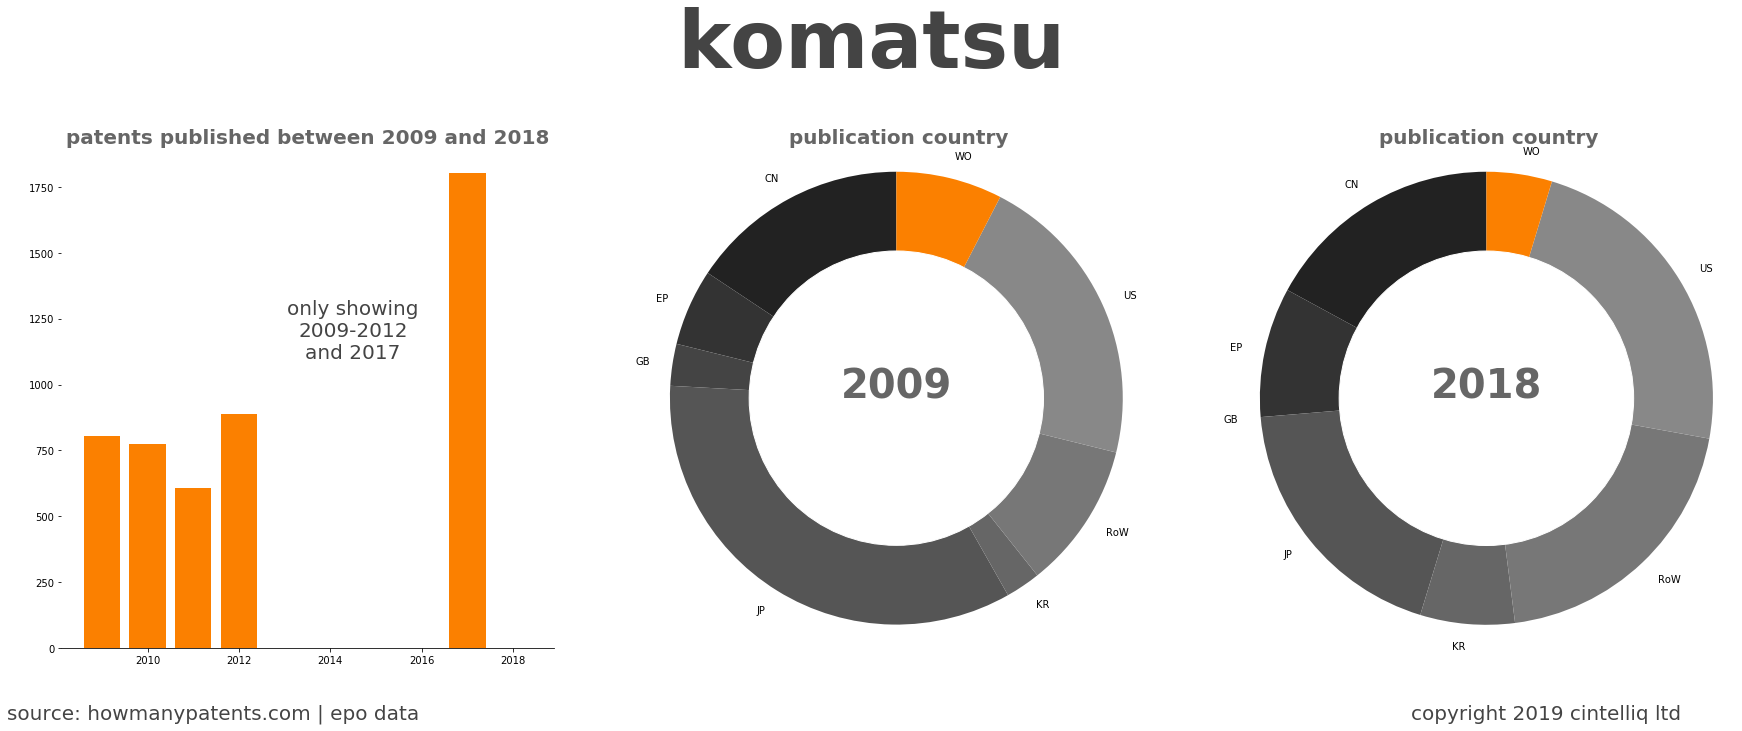 summary of patents for Komatsu